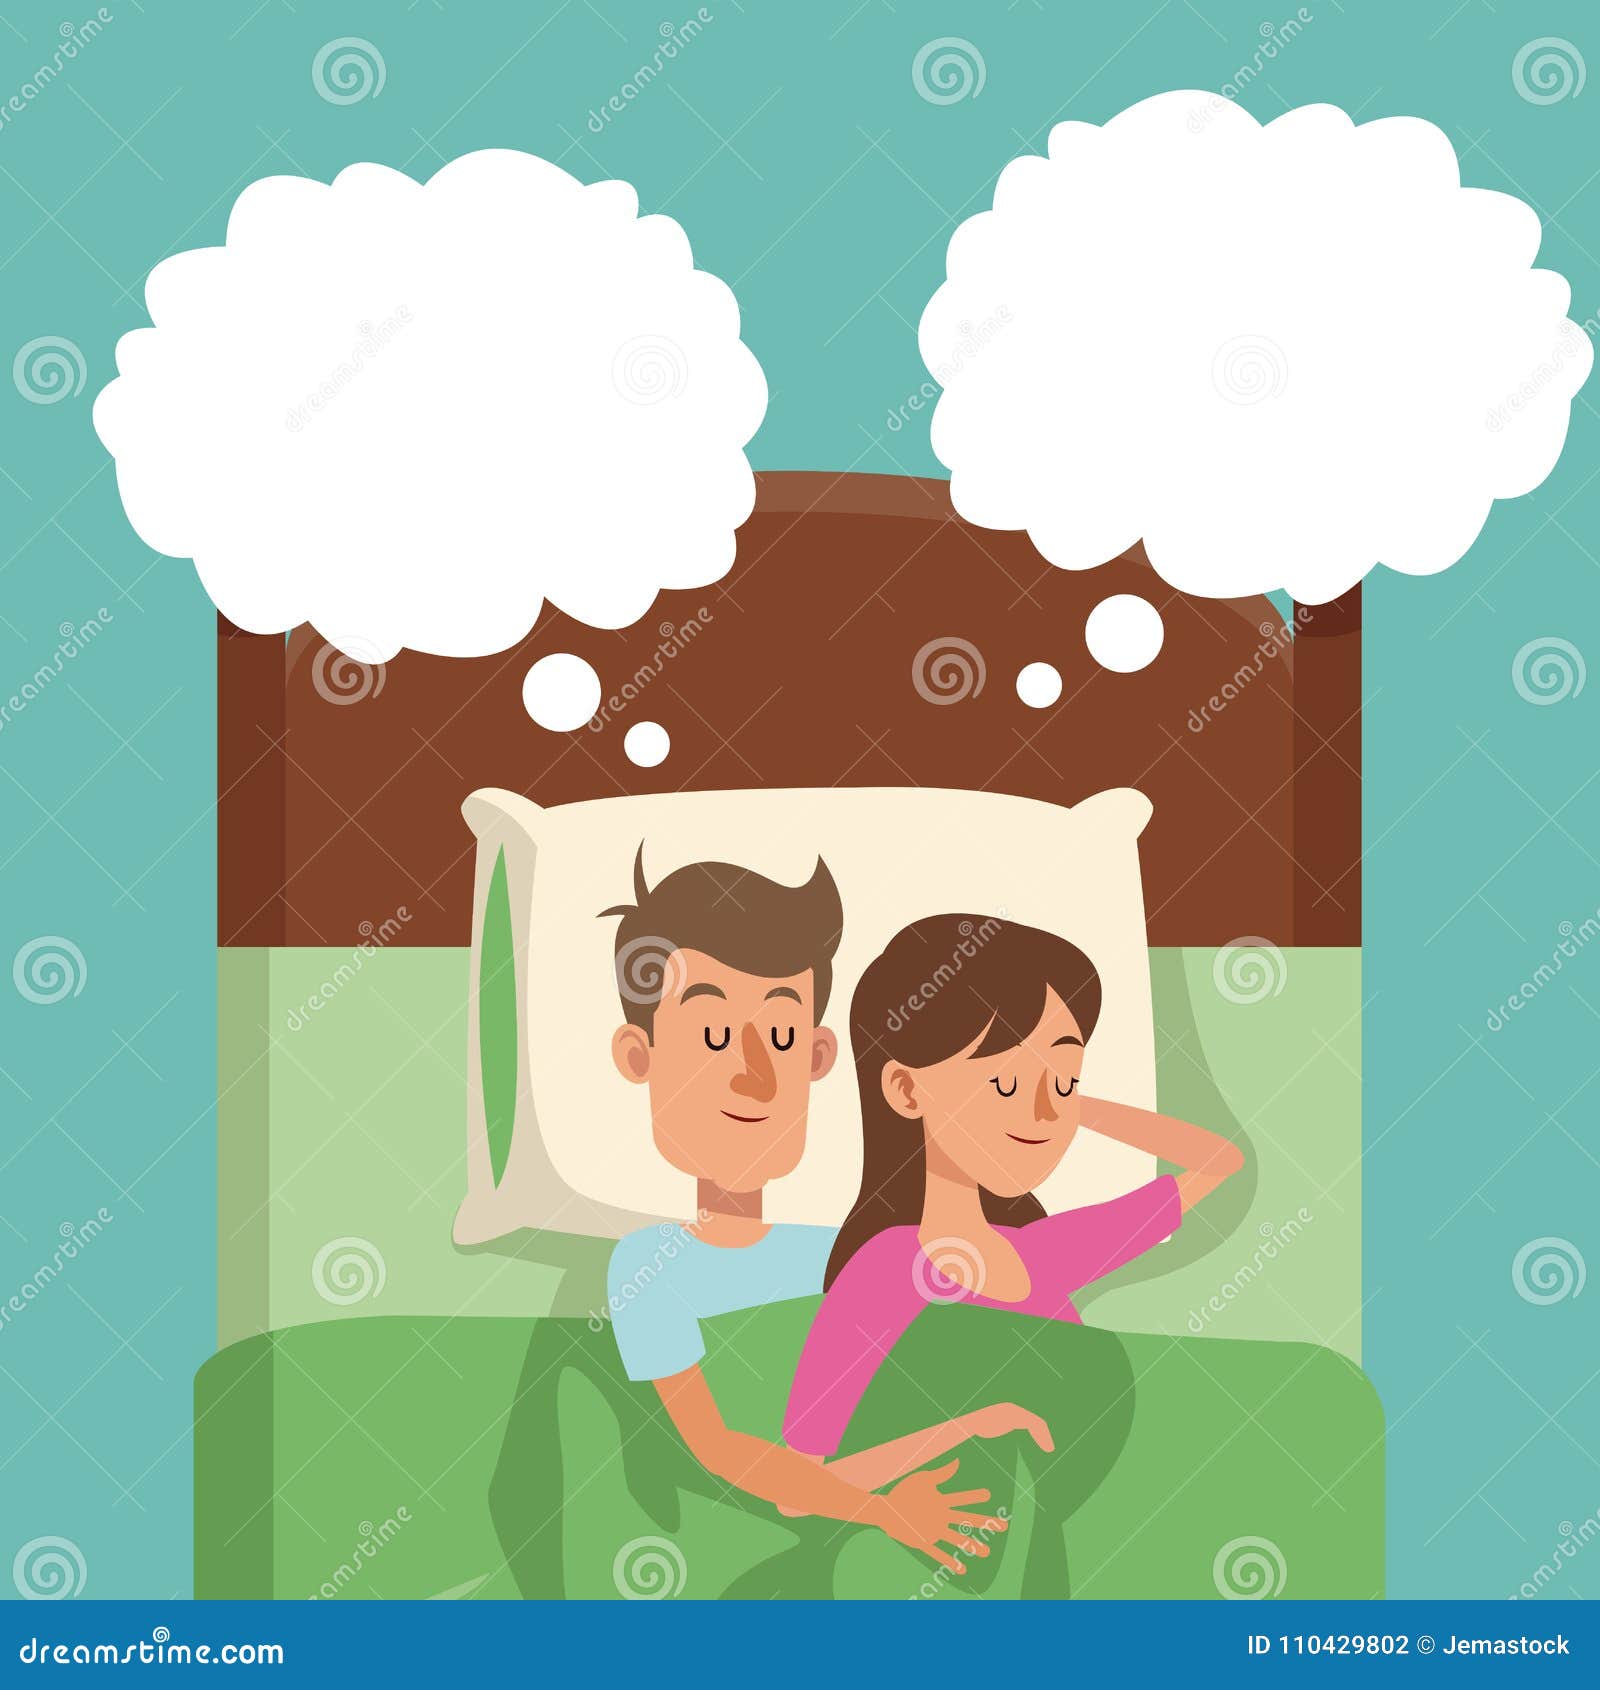 Sleeping Couple in Bed Man Hugs Woman Dream Stock Vector - Illustration ...